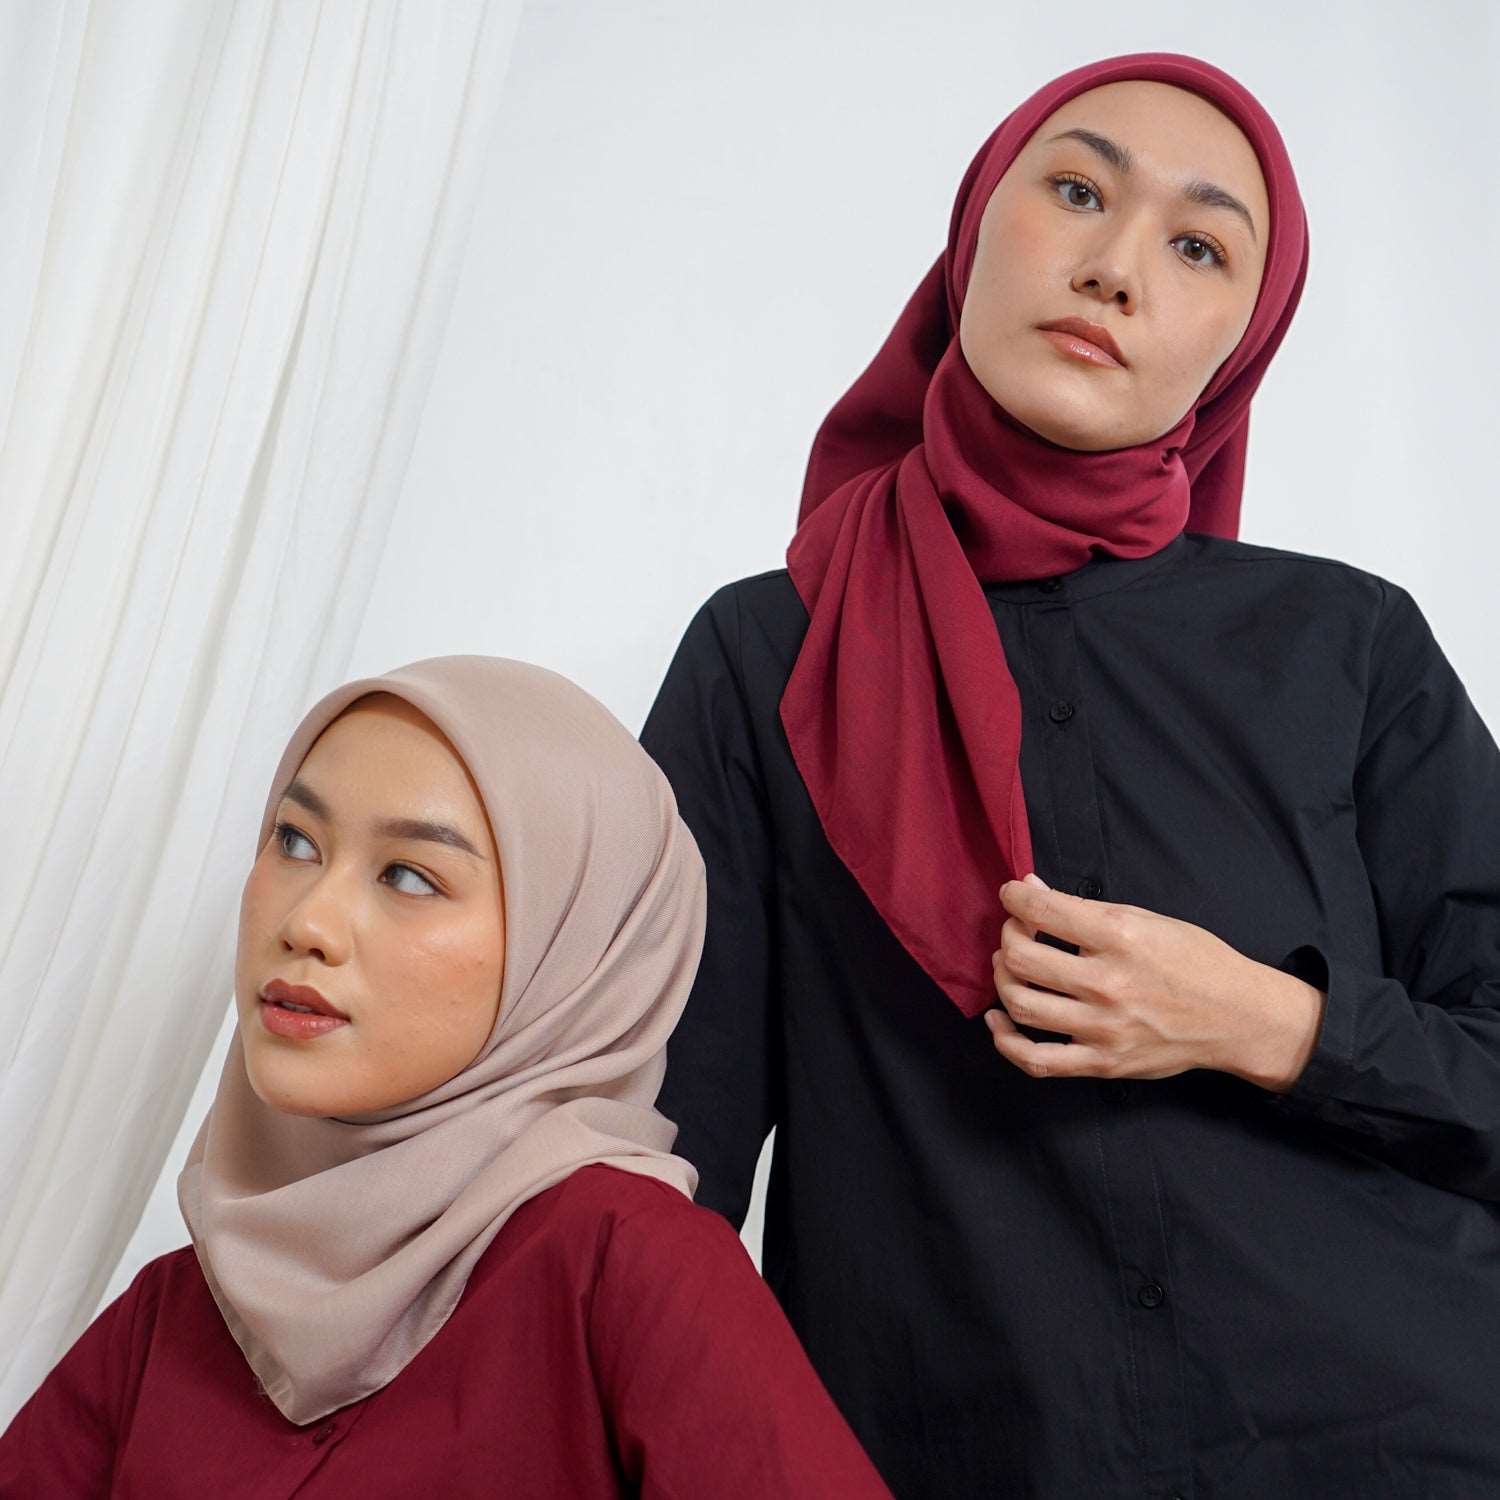 Dauky - Hijab Kerudung Segiempat Scarf Ultrafine